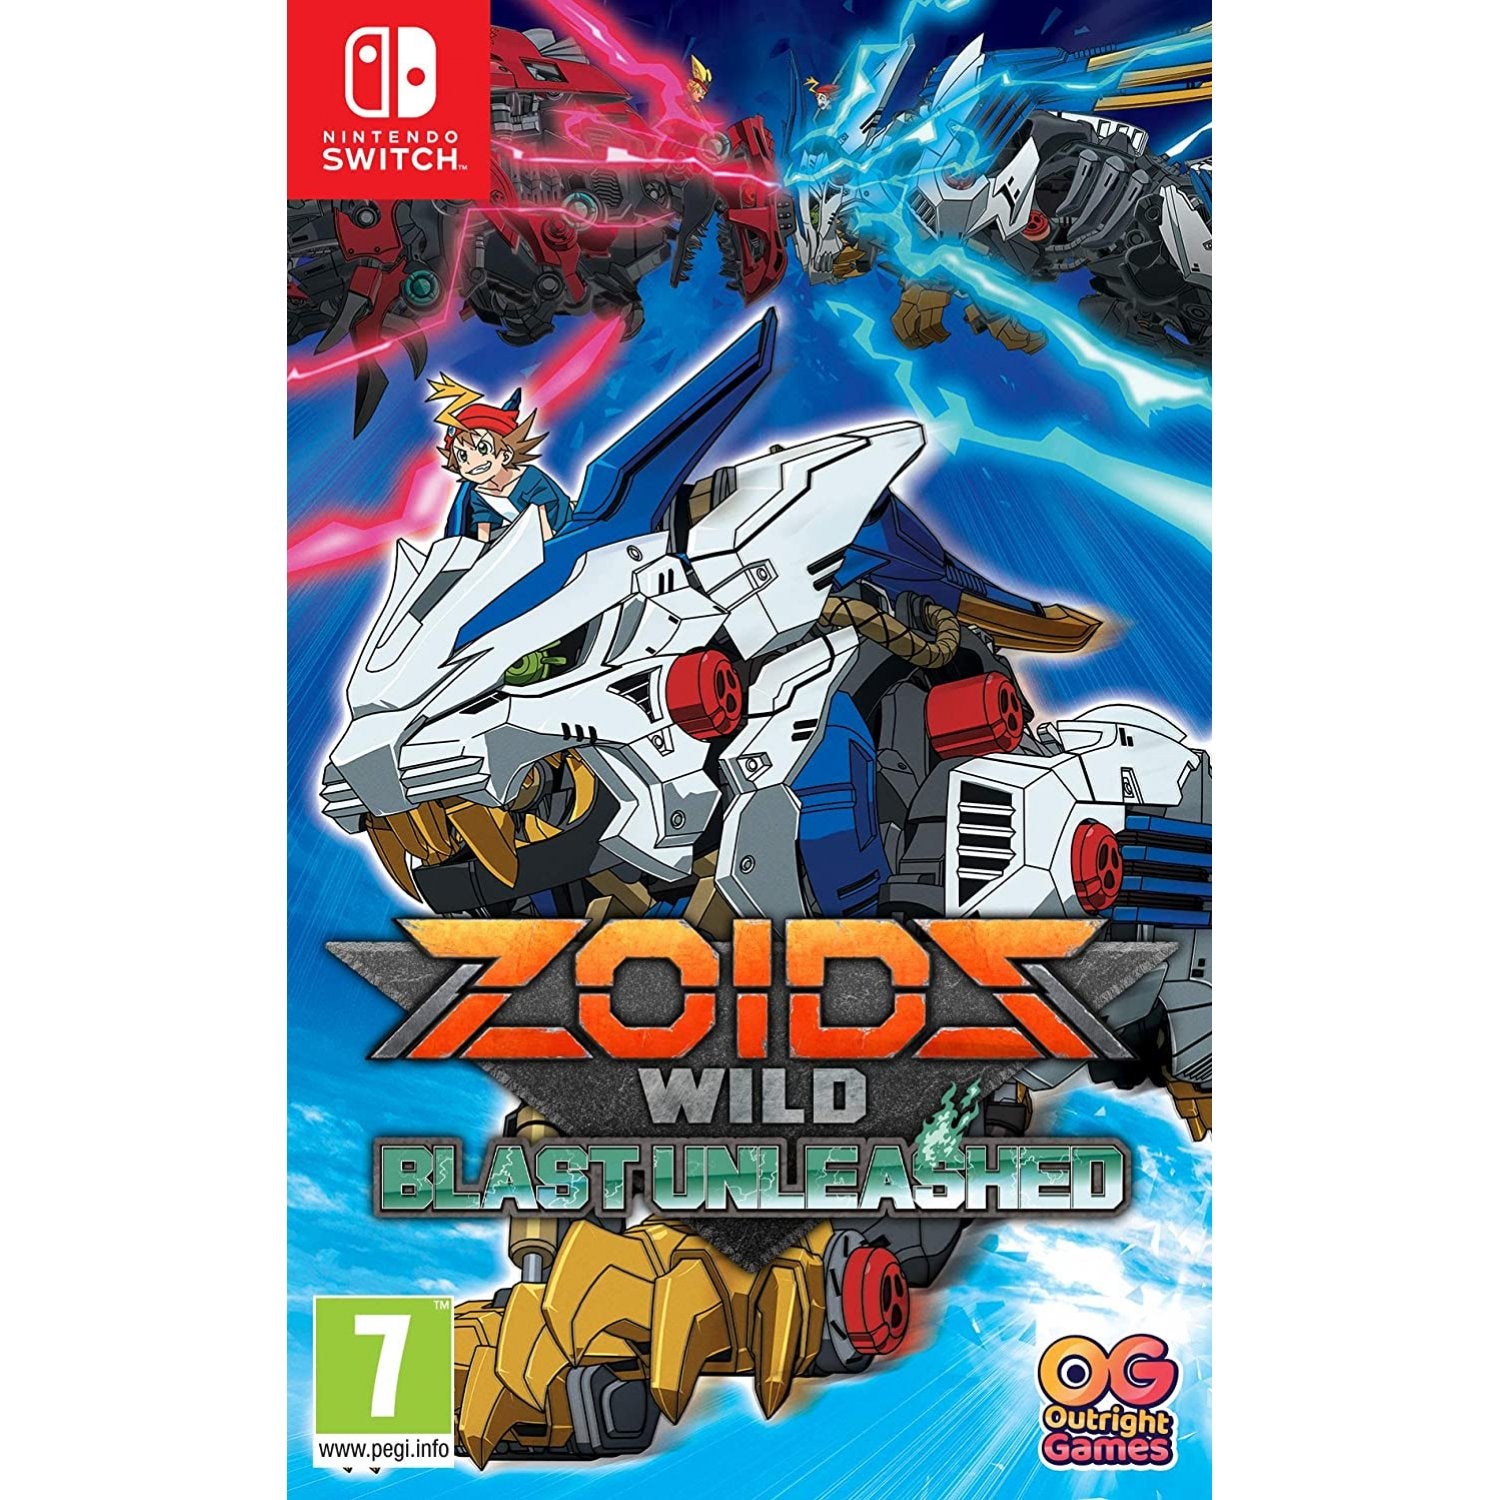 Nintendo Switch Zoids Wild: Blast Unleashed